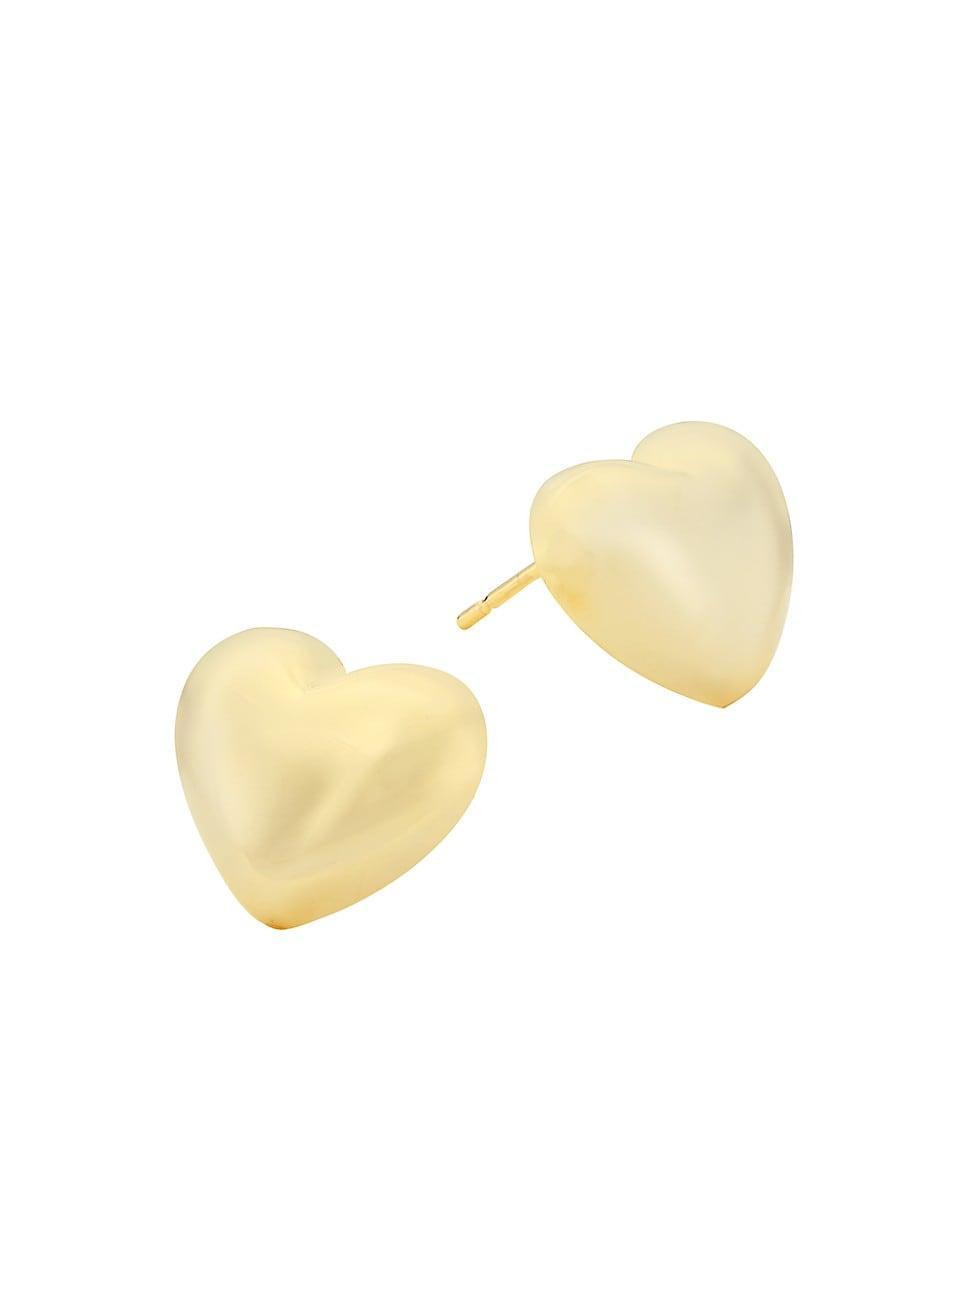 Shashi Ana Heart Stud Earrings Product Image